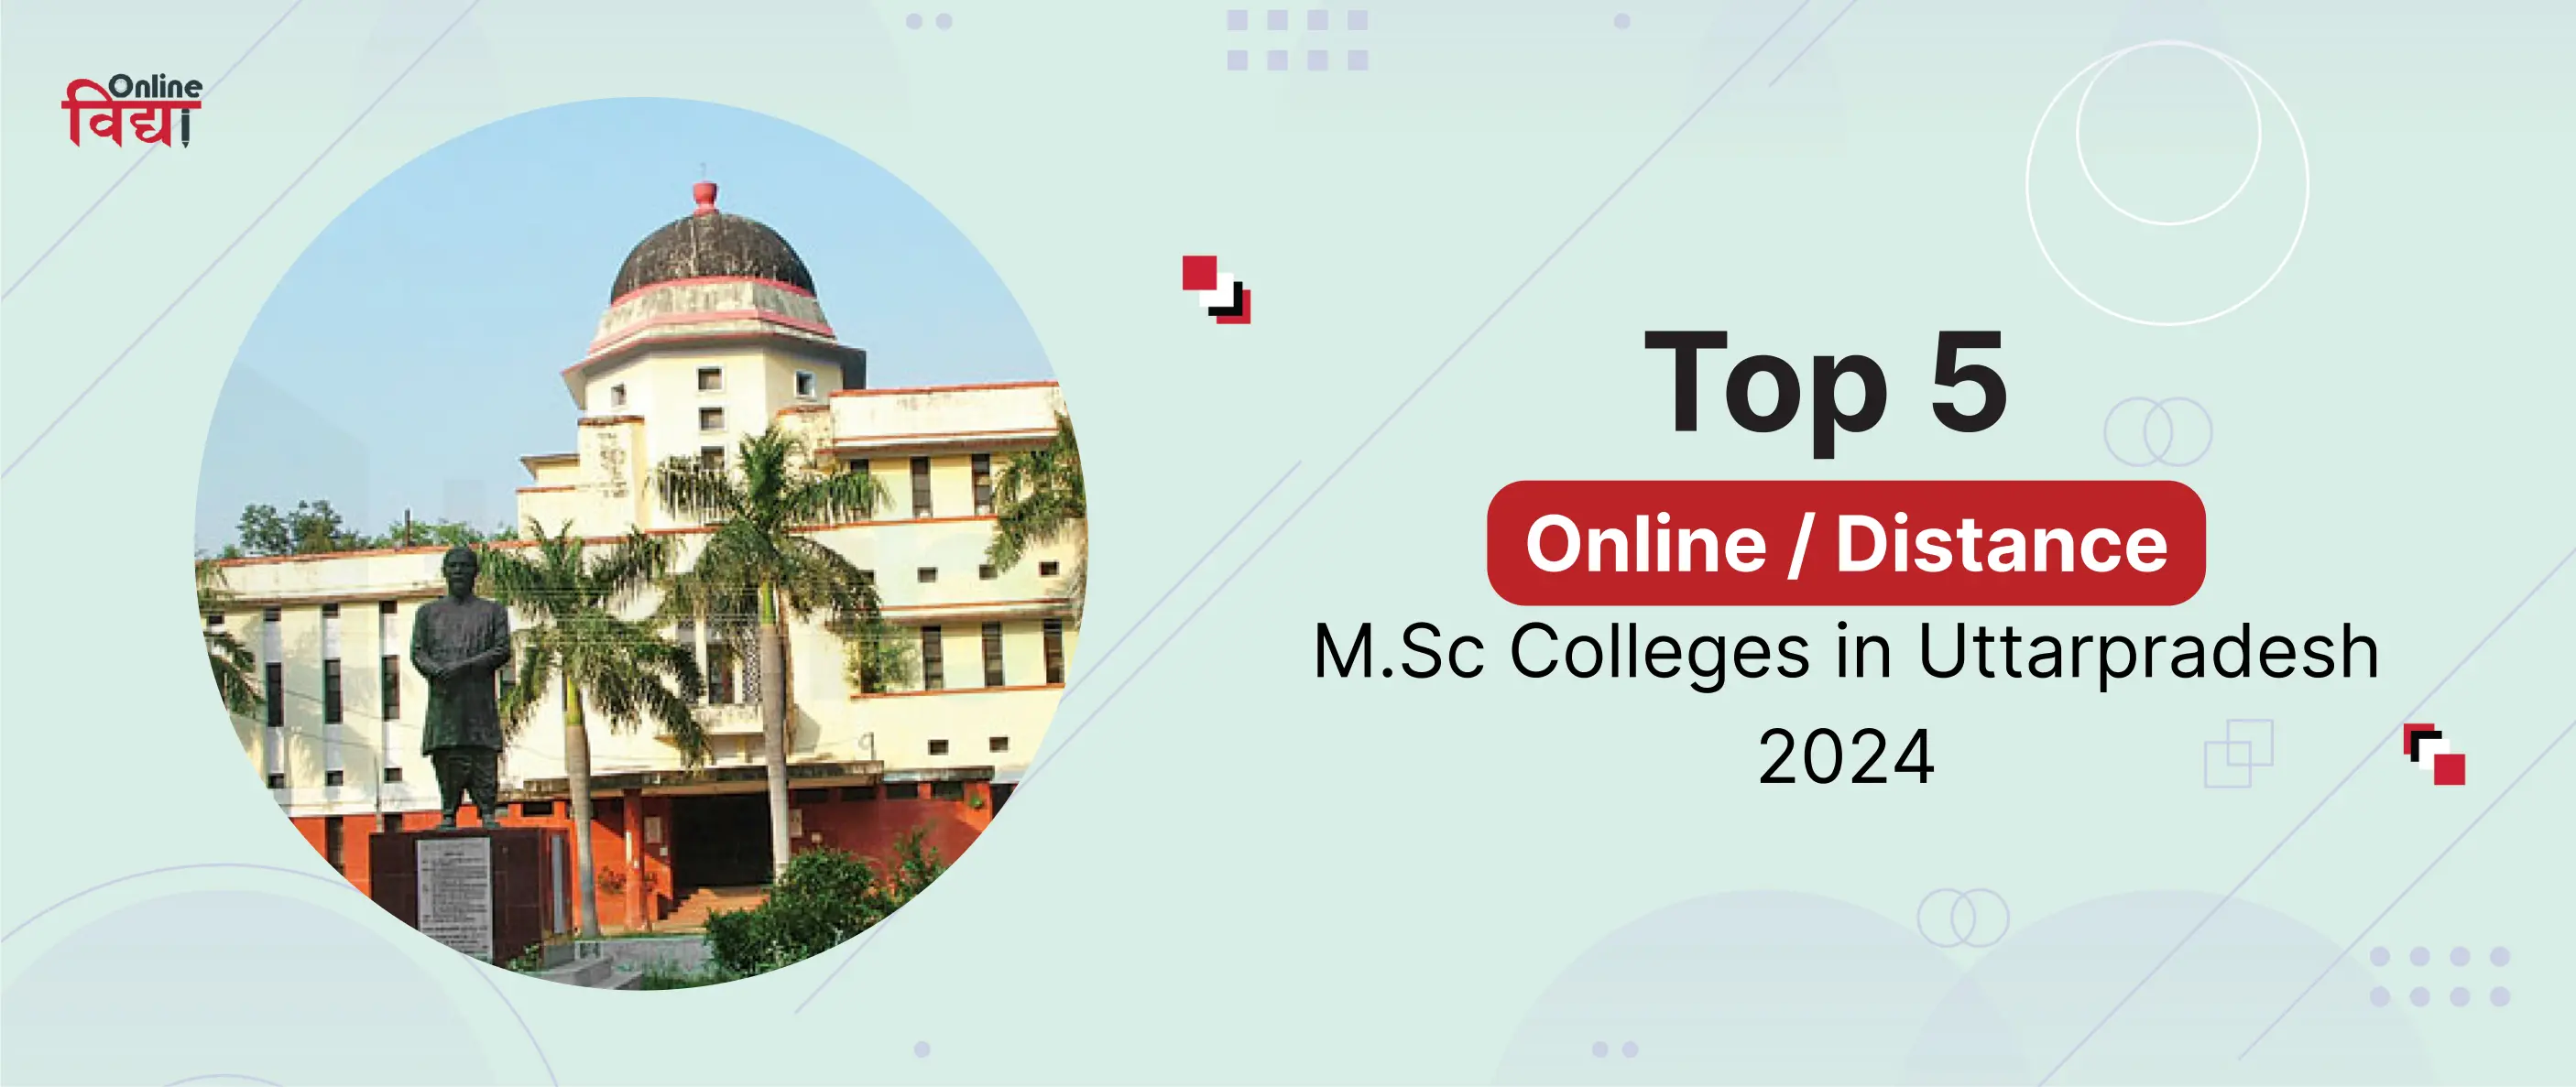 Top 5 Online/Distance M.Sc Colleges in Uttarpradesh 2024